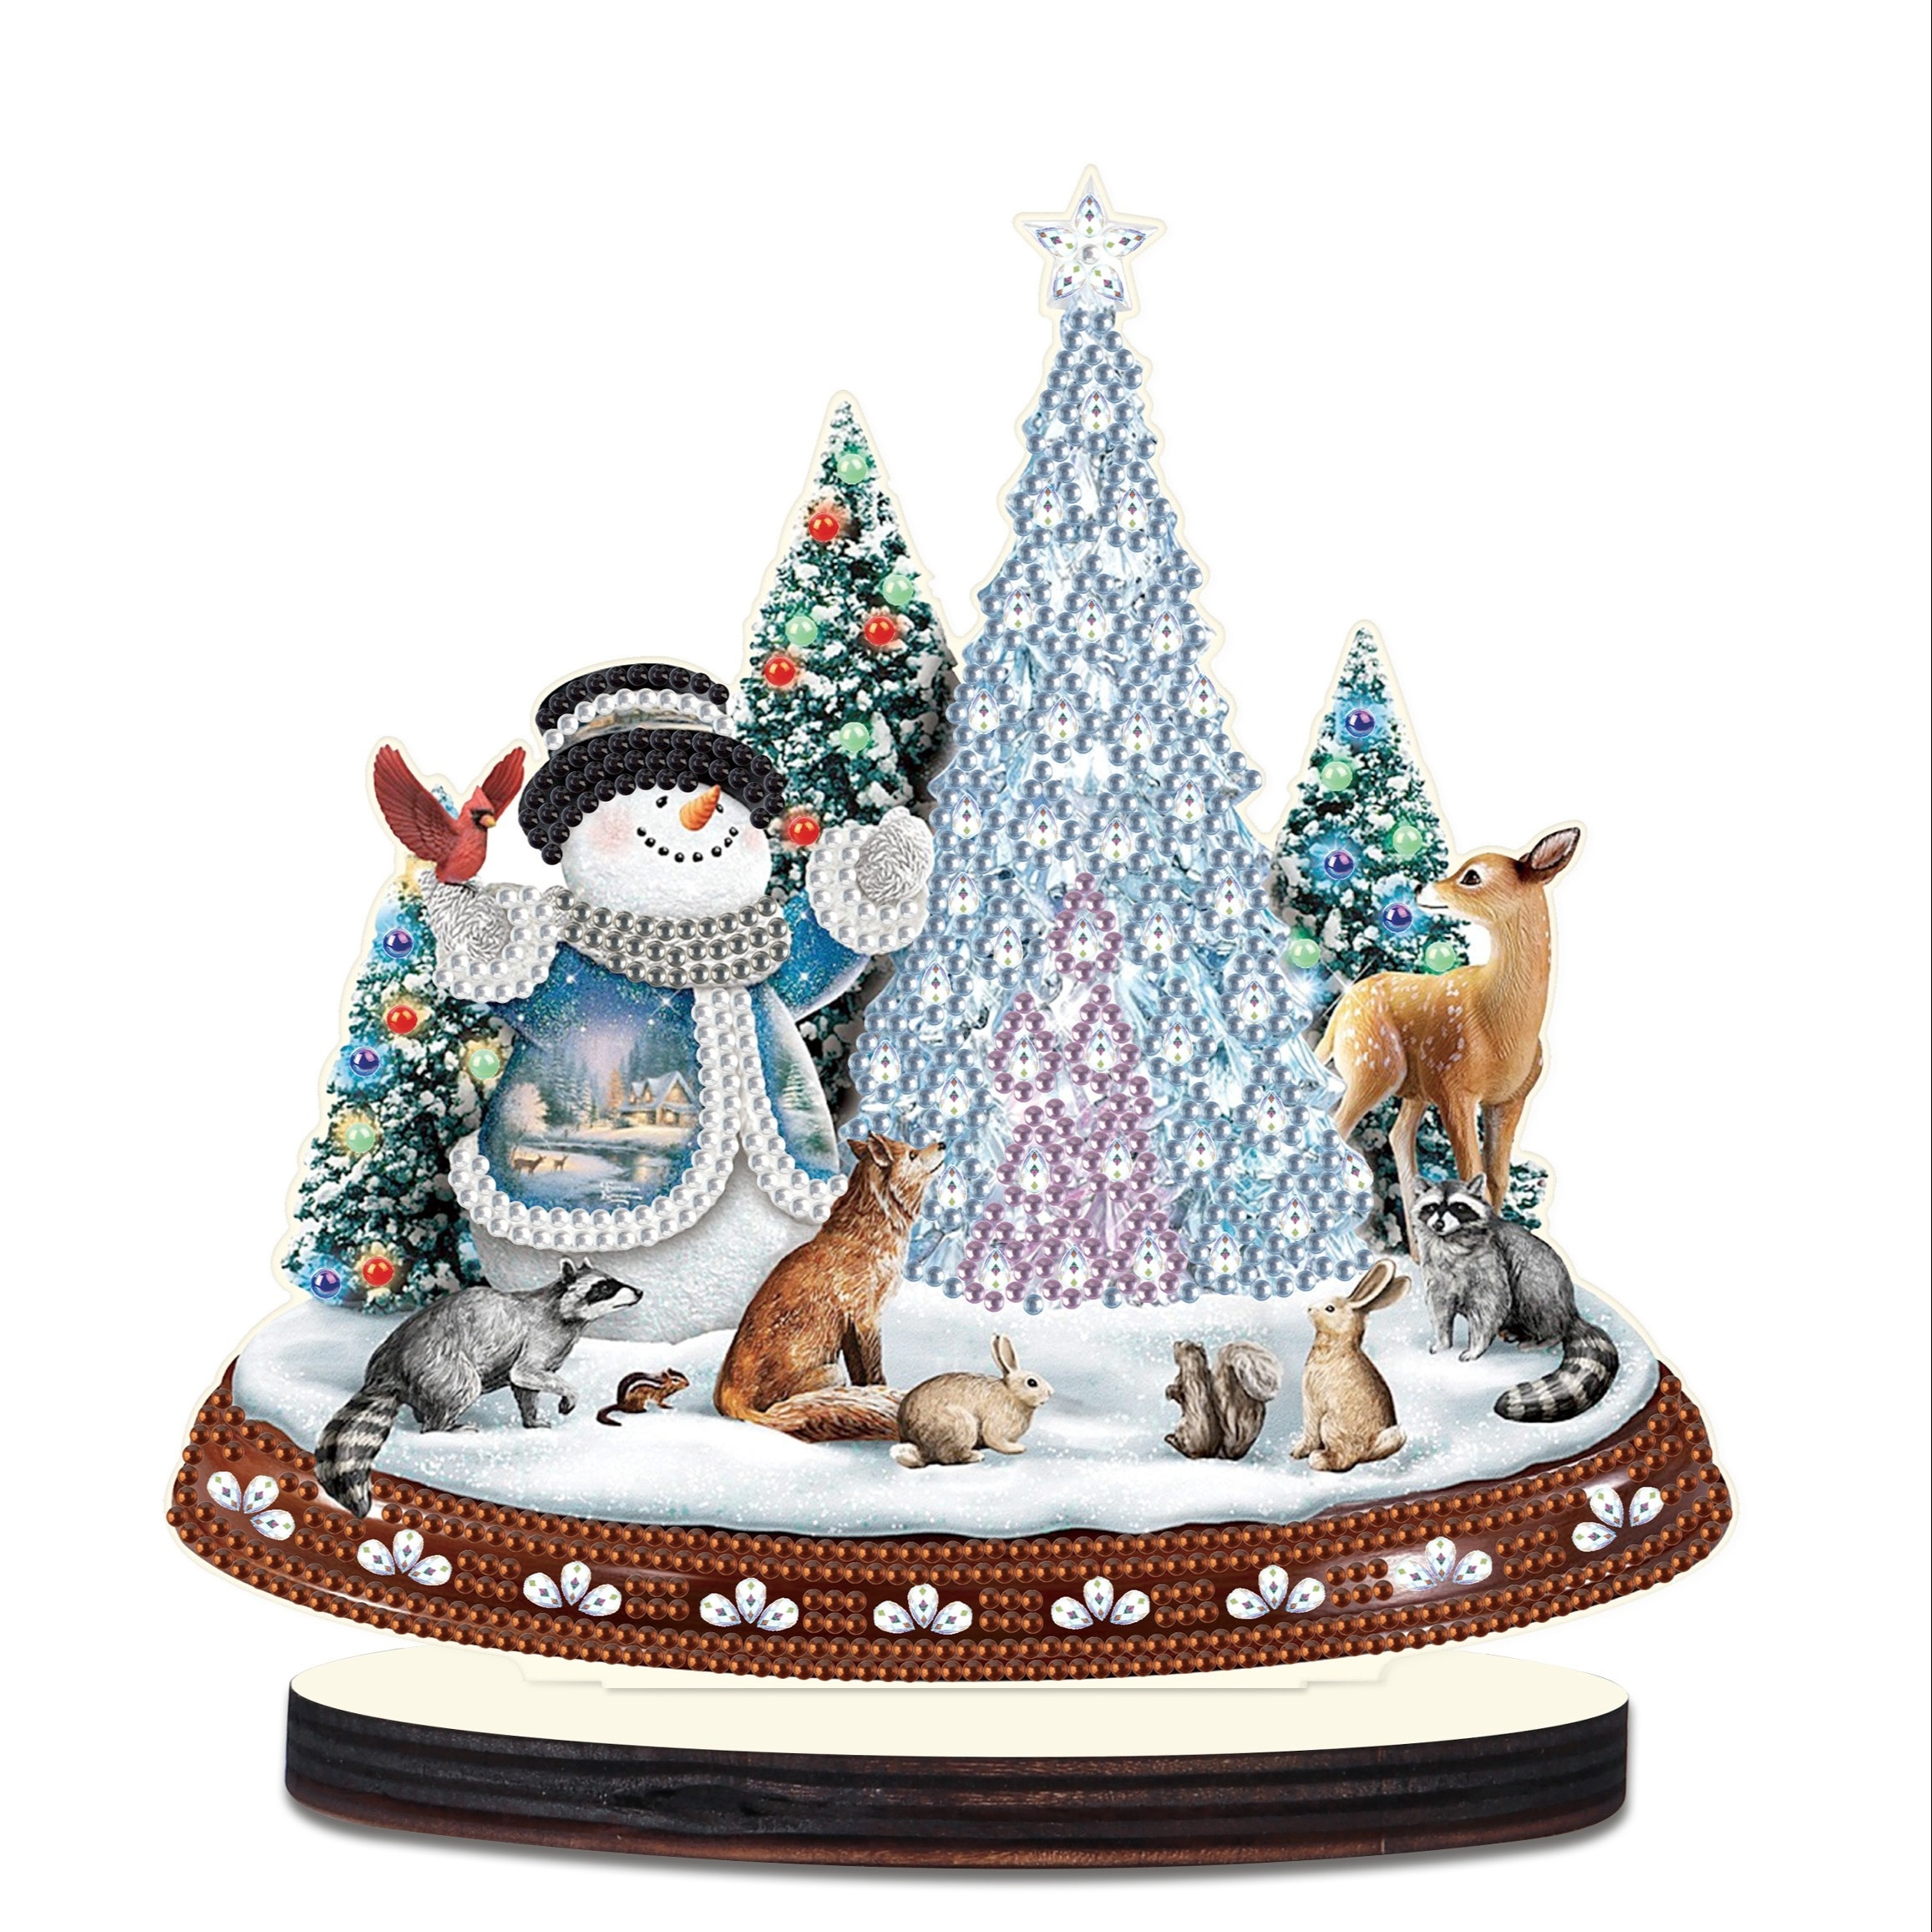 30x30 cm DIY Diamond Painting Kit de árbol de Navidad, Kit de